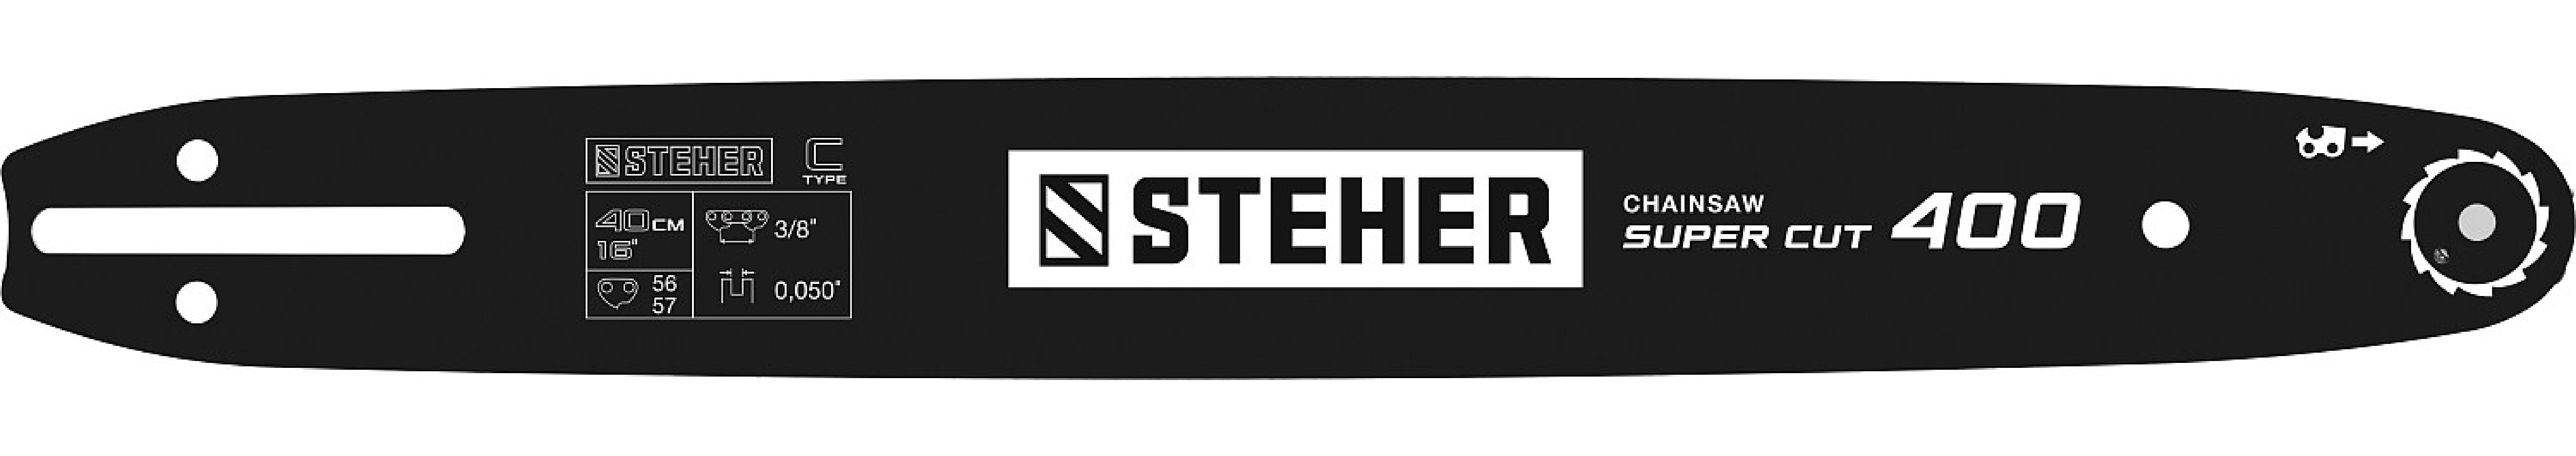 STEHER type C  3 8  1.3  40     (75203-40)